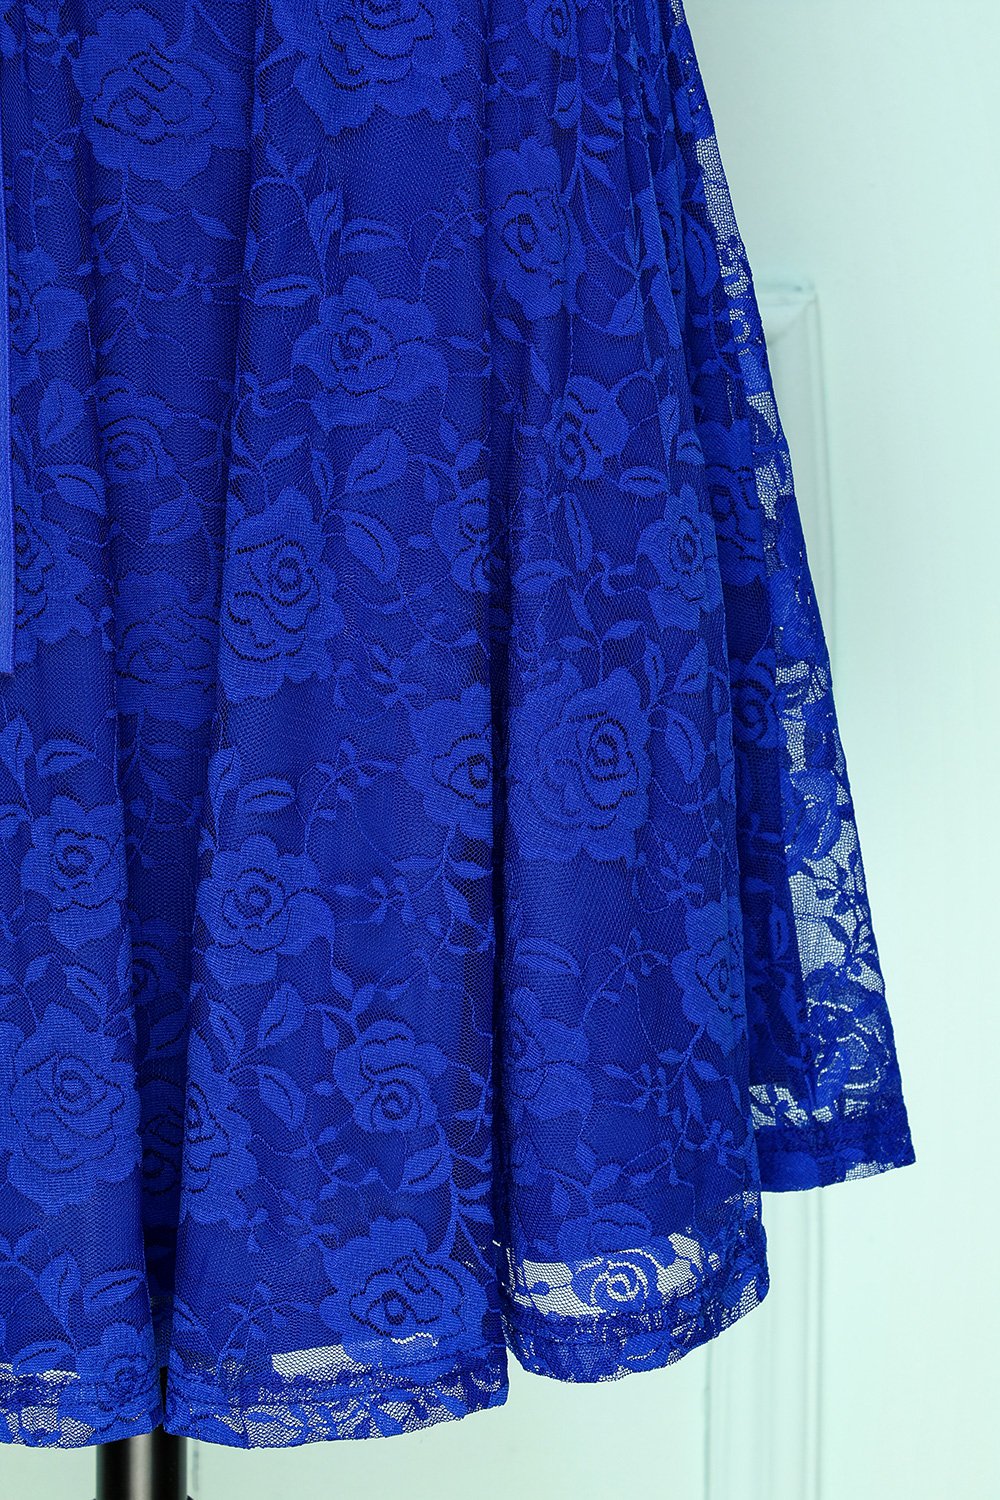 Lace Royal Blue Dress